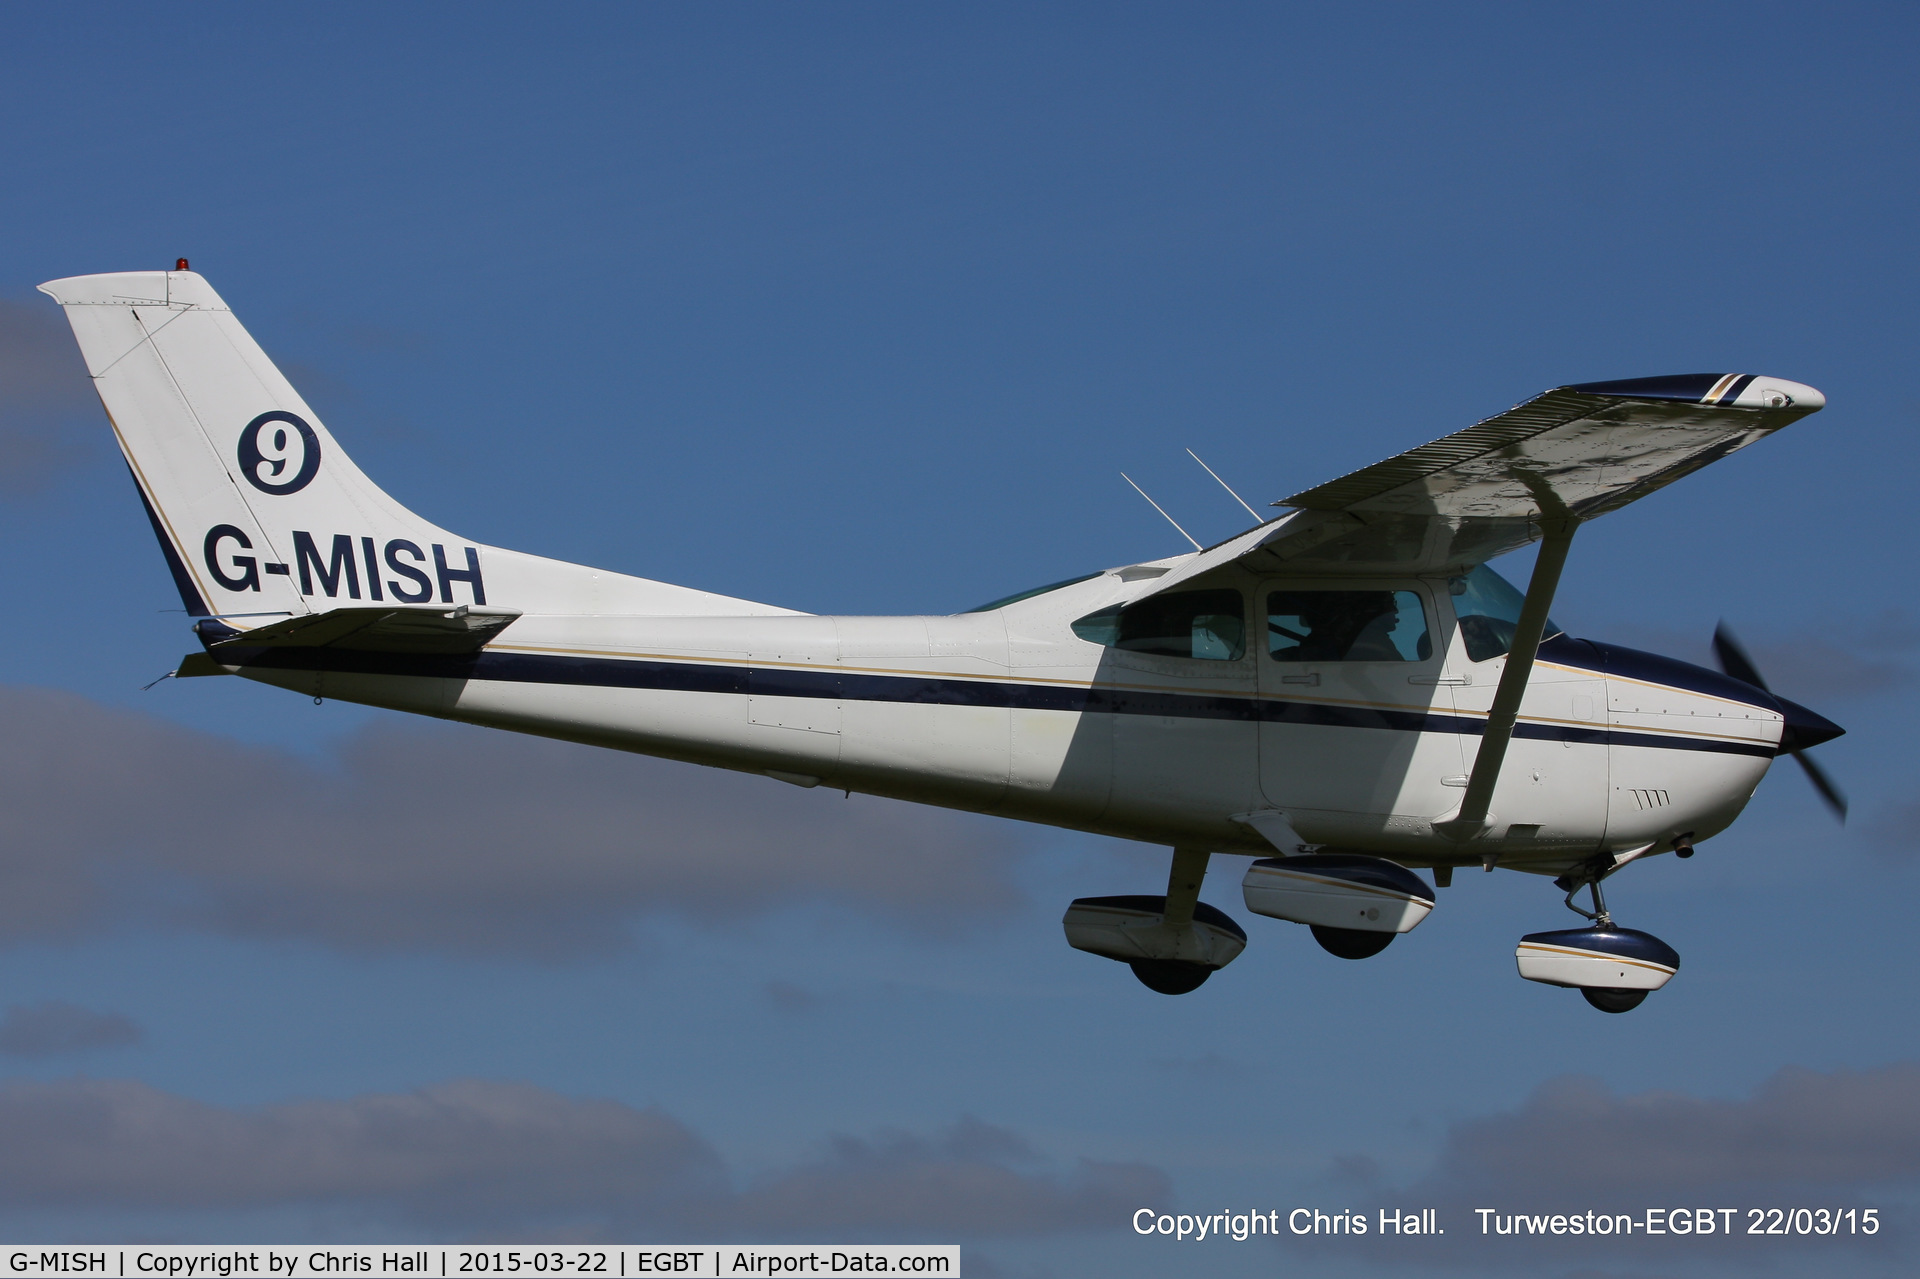 G-MISH, 1981 Cessna 182R Skylane C/N 182-67888, at the Vintage Aircraft Club spring rally